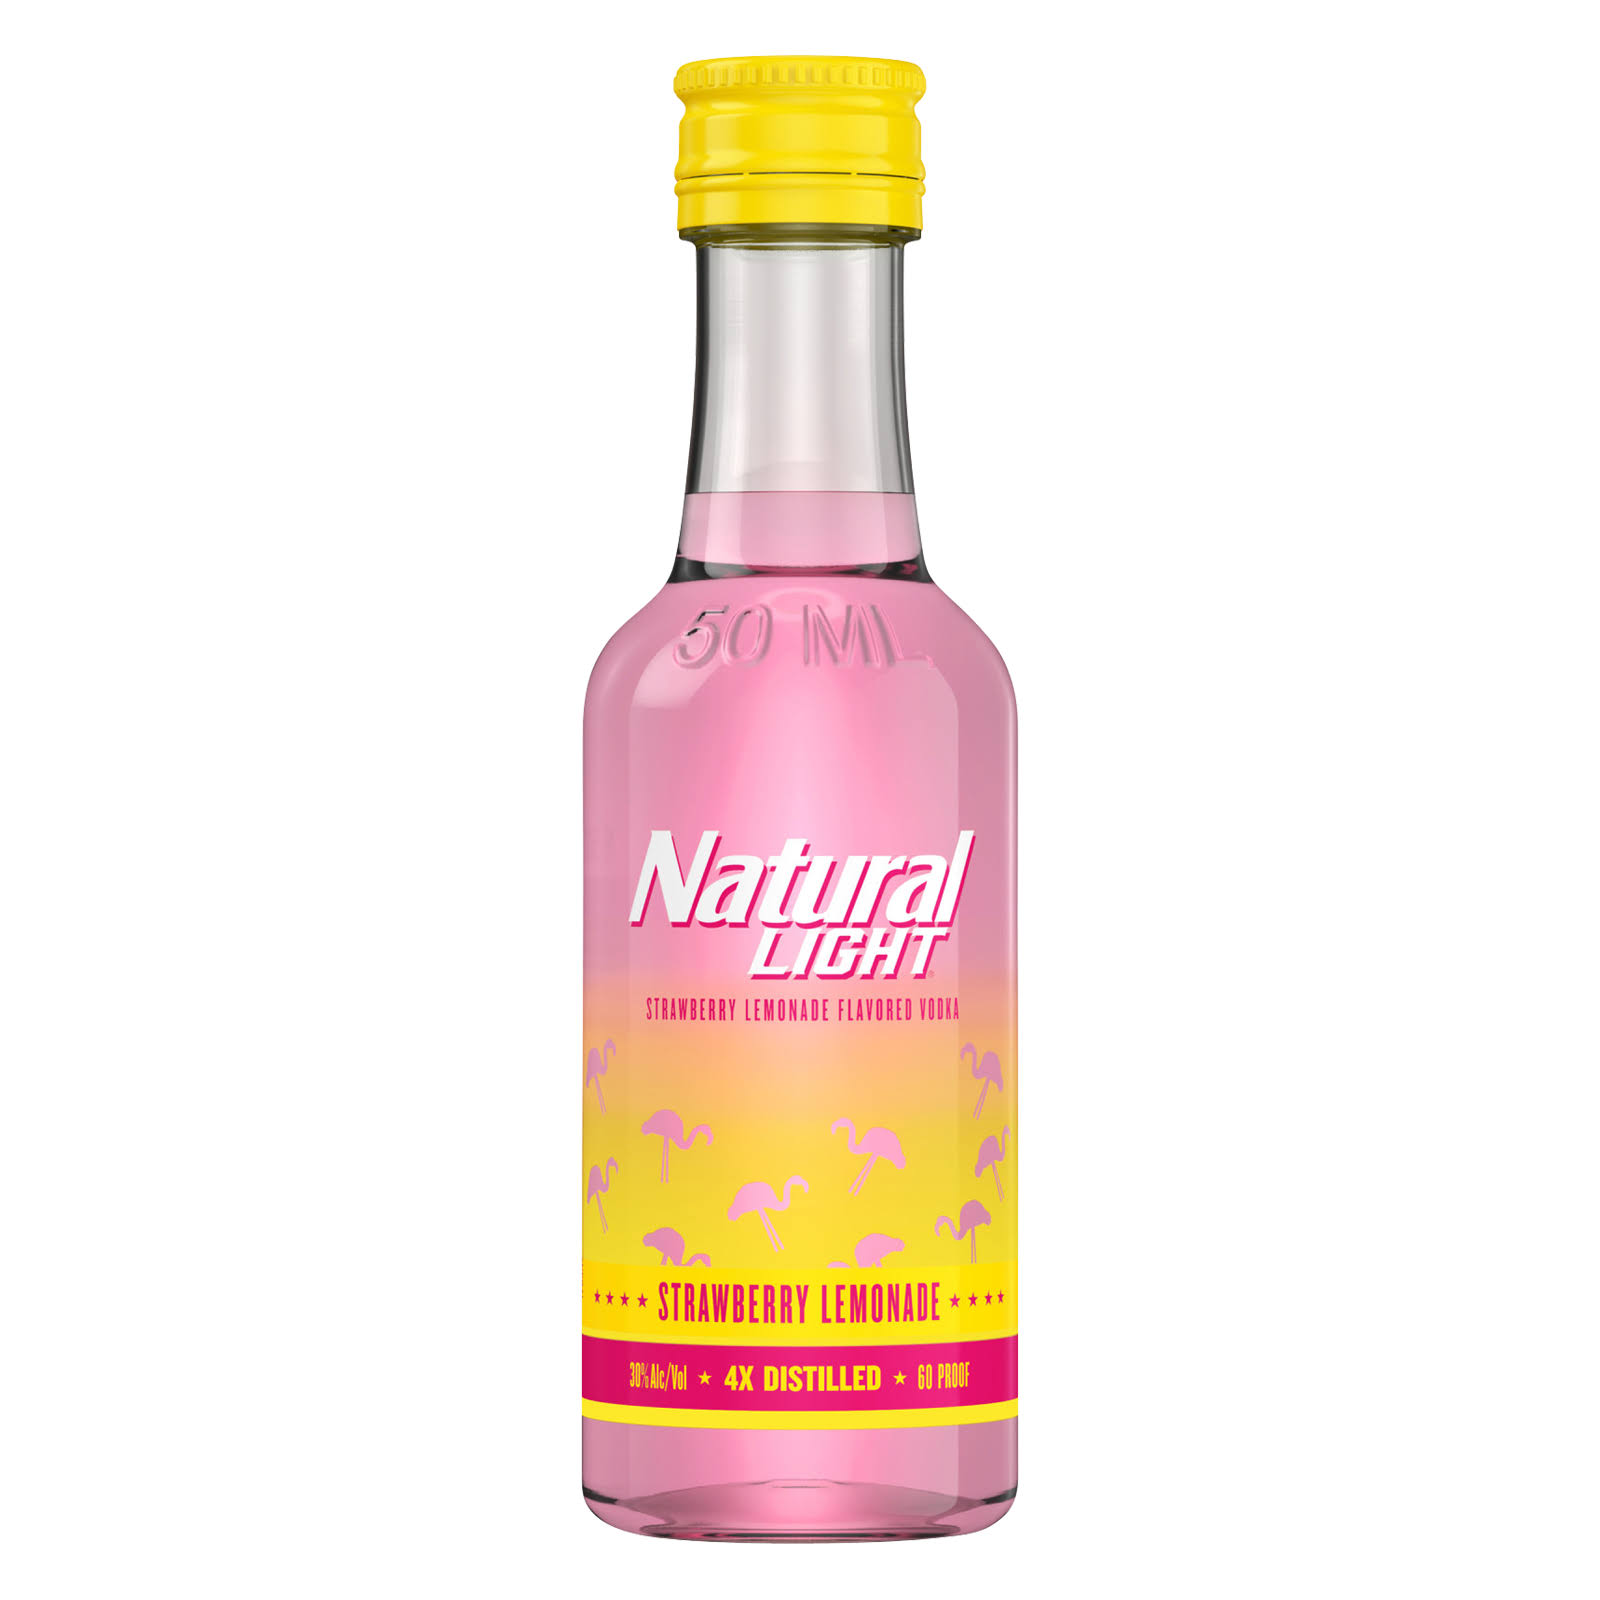 Natural Light Strawberry Lemonade Flavored Vodka - 50 ml